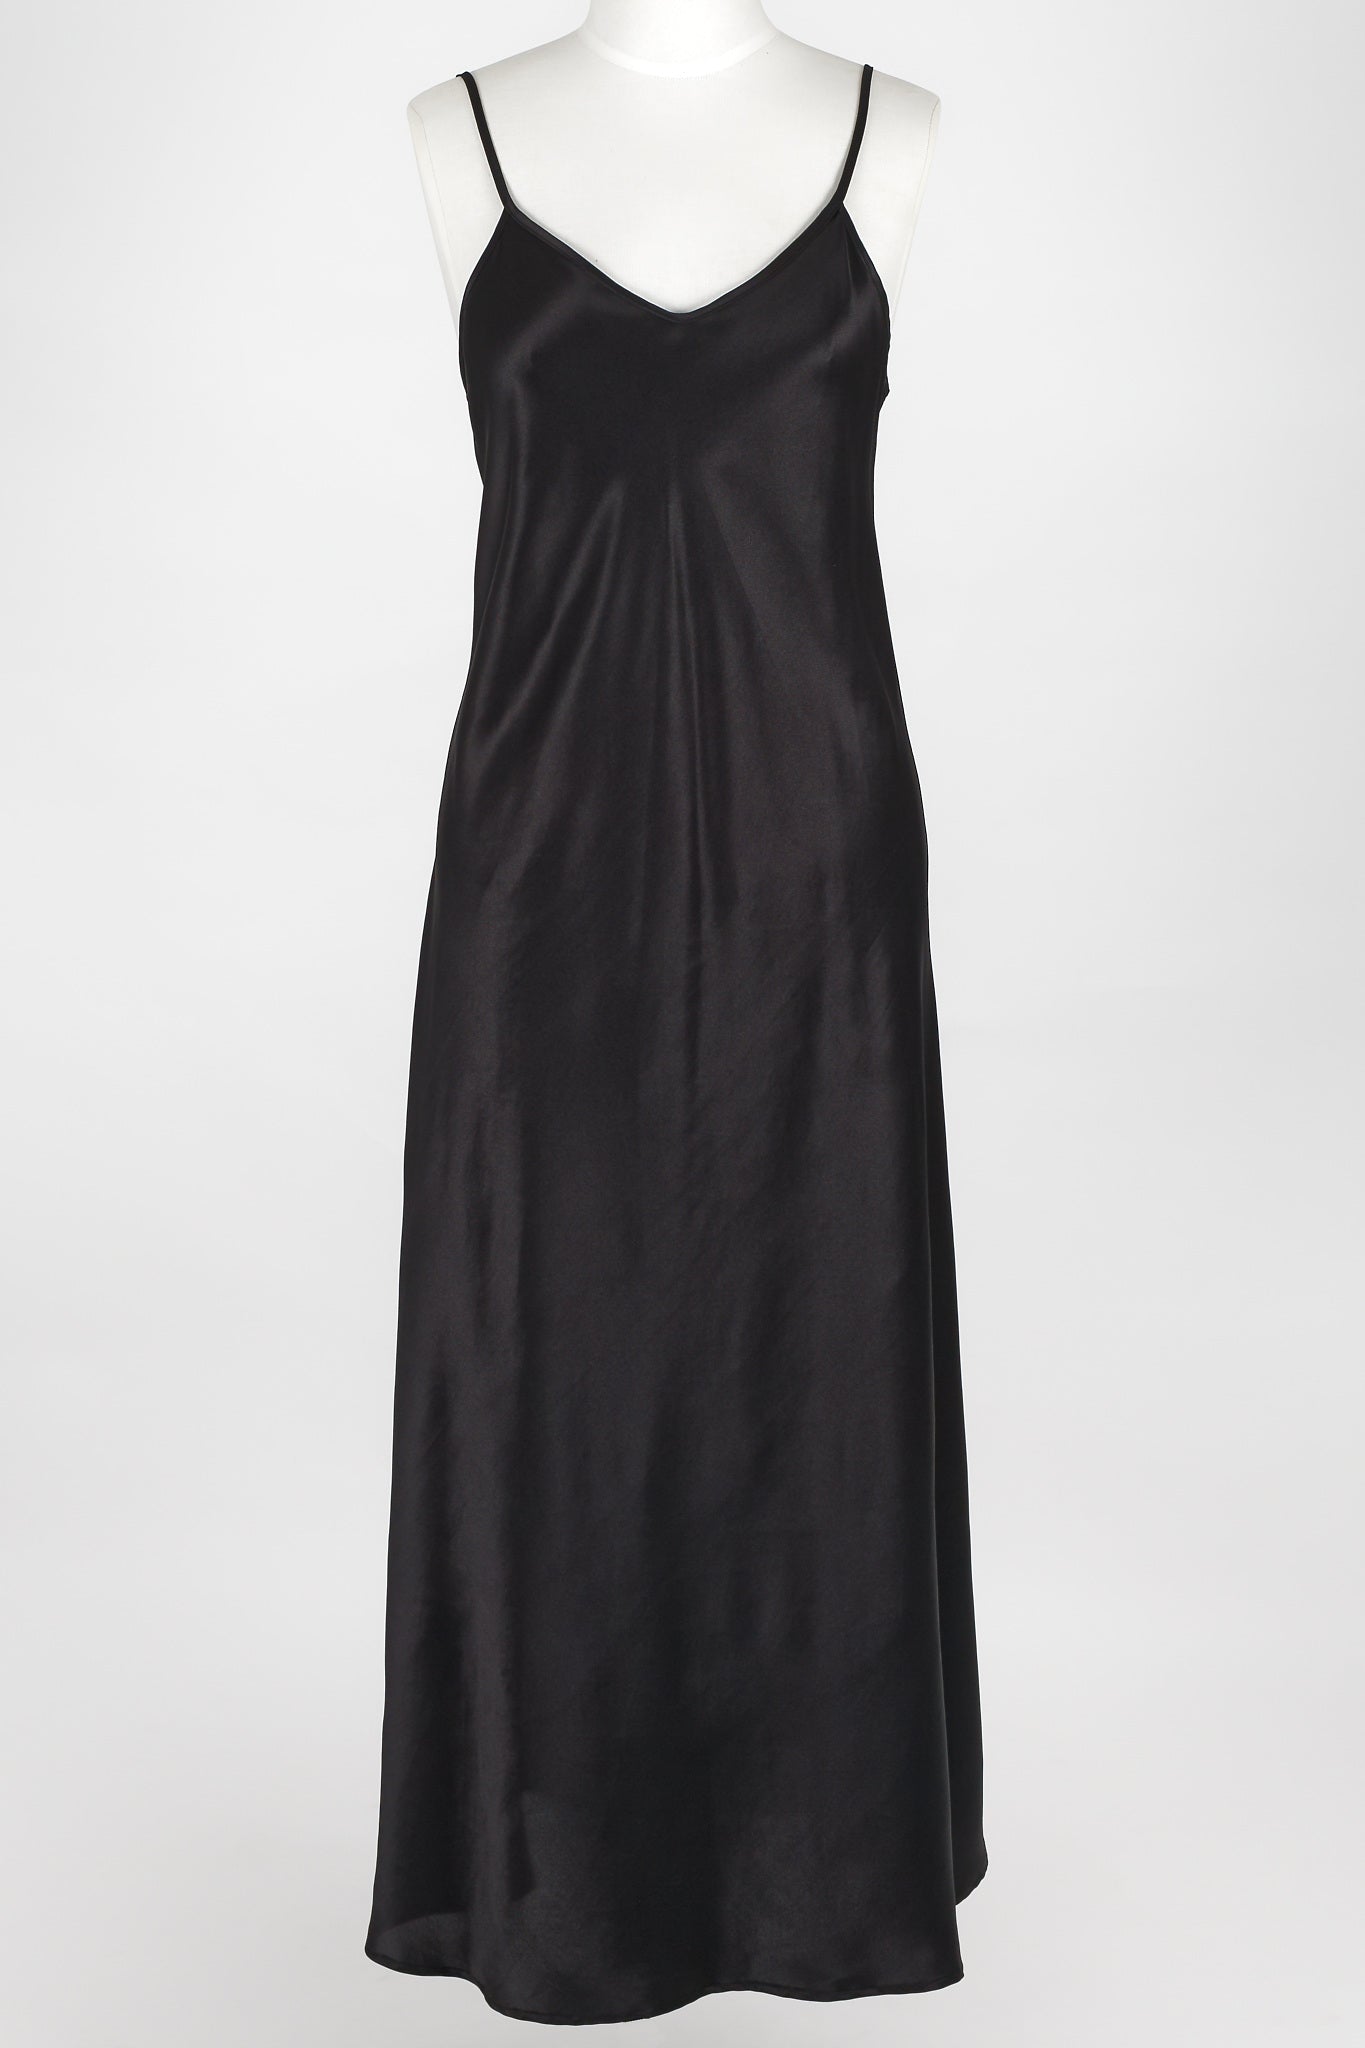 Long silk chemise in black from Carmen Kirstein